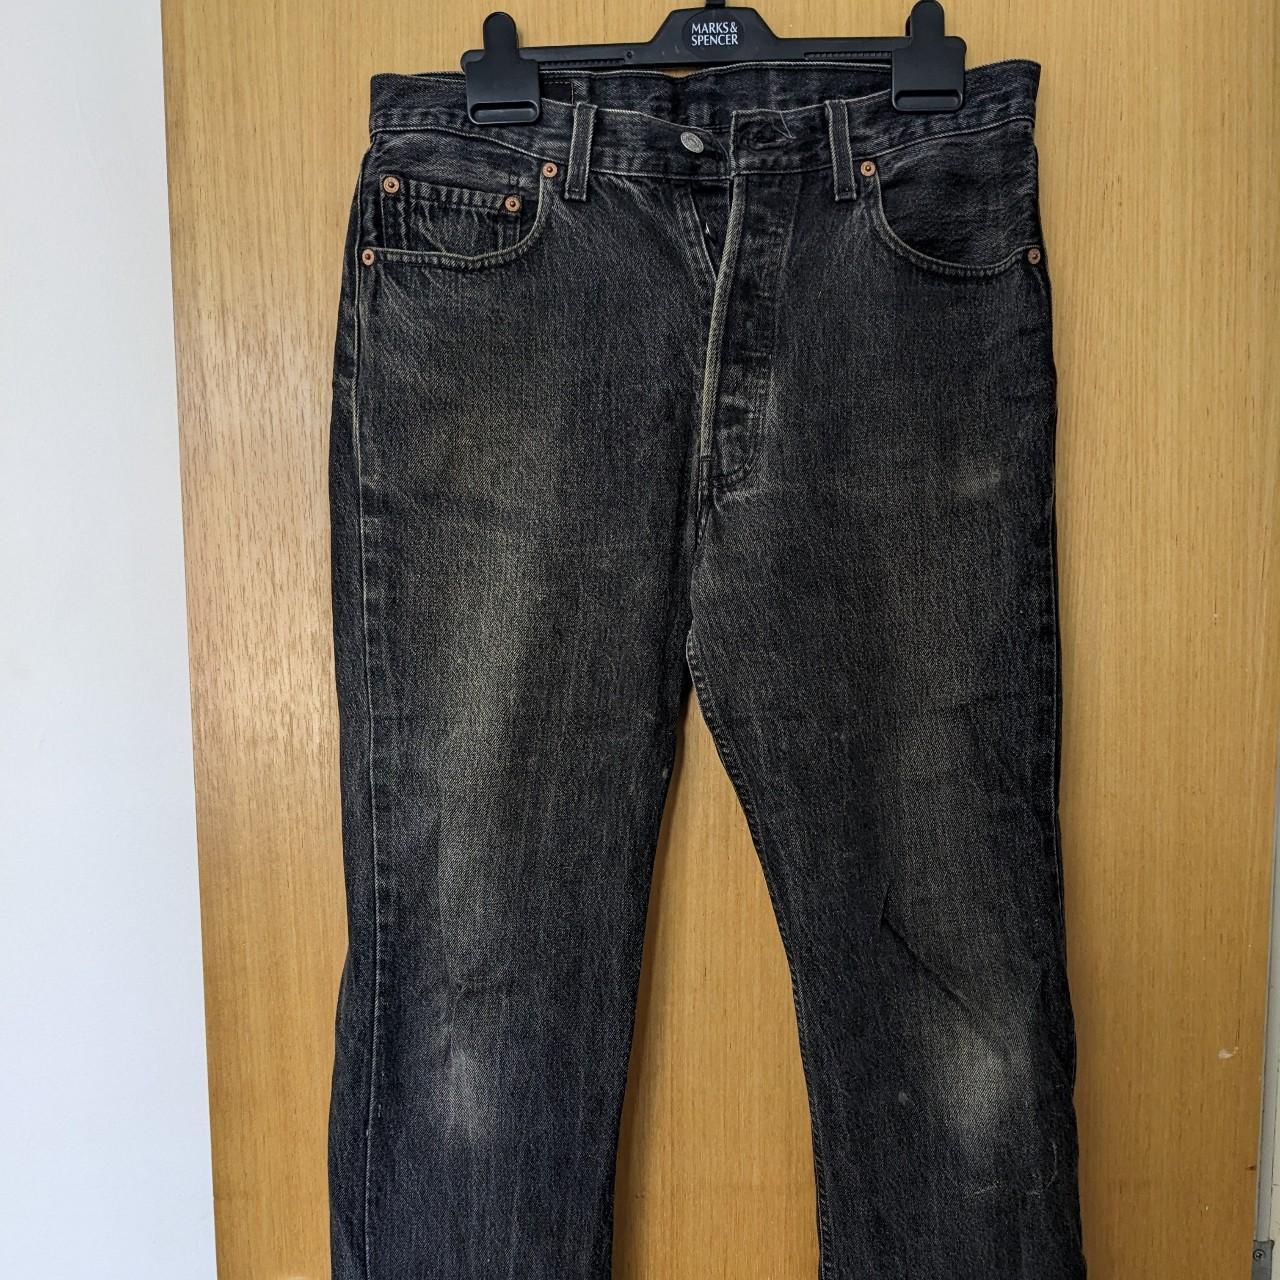 Washed dark grey levi jeans, 34w/36l, worn - Depop